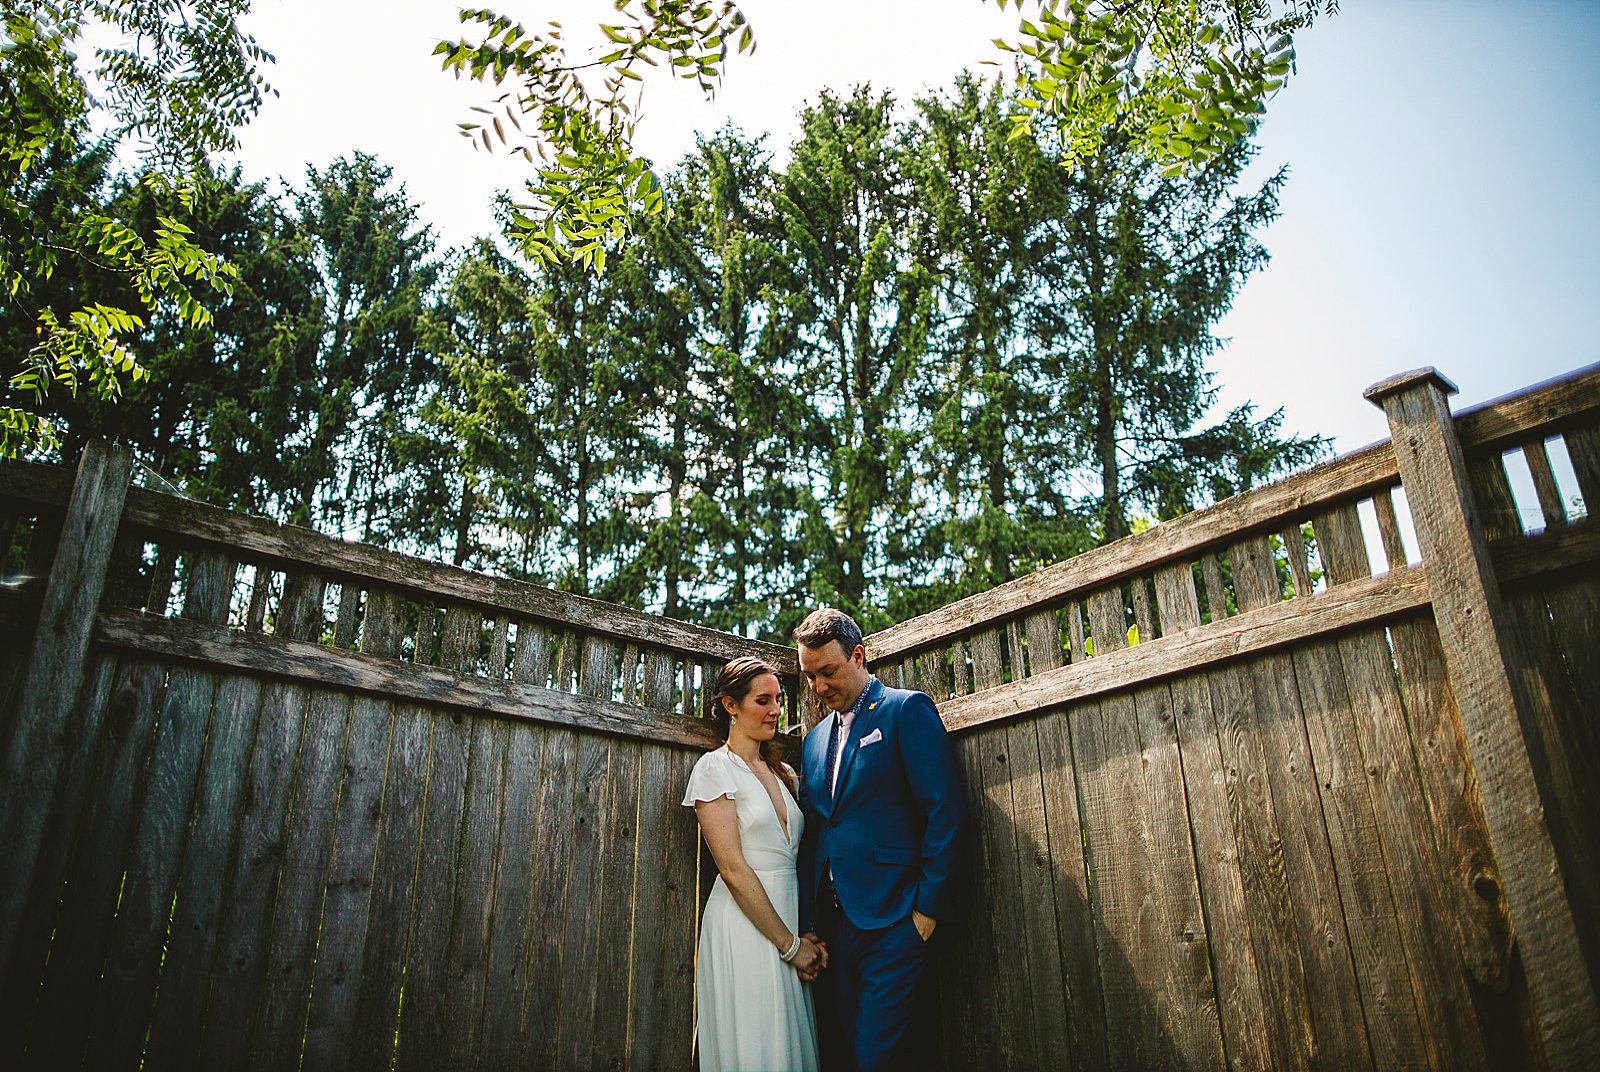 13 creative backyard wedding photos - Amazing Wedding in Backyard // Kristen + Jeff